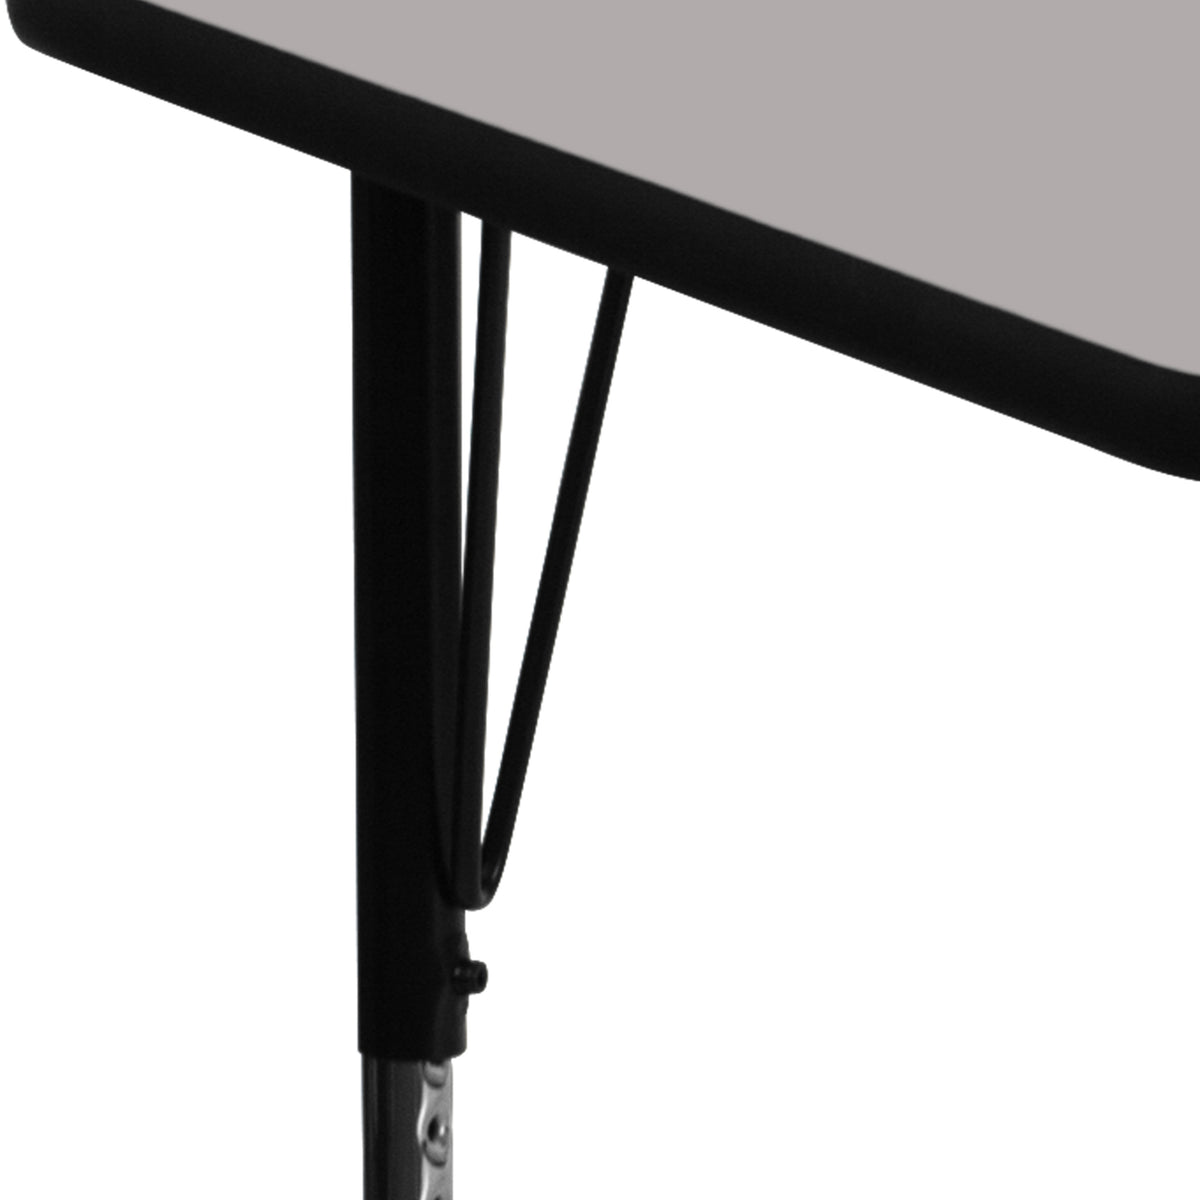 Gray |#| 24inchW x 60inchL Rectangular Grey HP Laminate Activity Table - Height Adjustable Legs